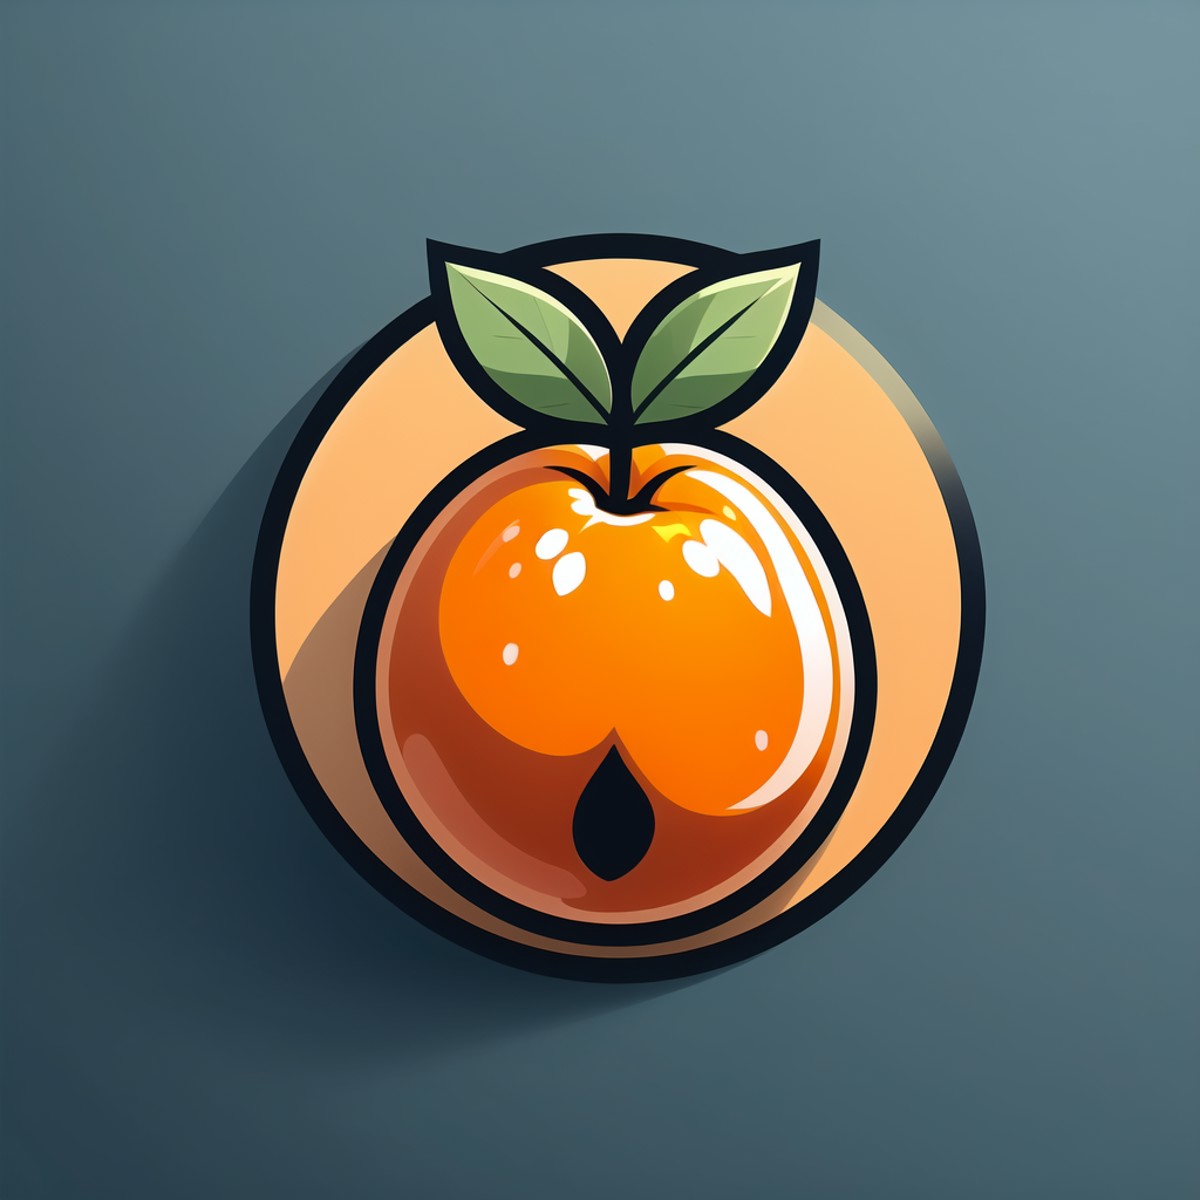 (masterpiece, best quality:1.1), (round logo:1.05), no humans, a juicy orange nectarine, tangy, sweet, fruit, orchard, gra...